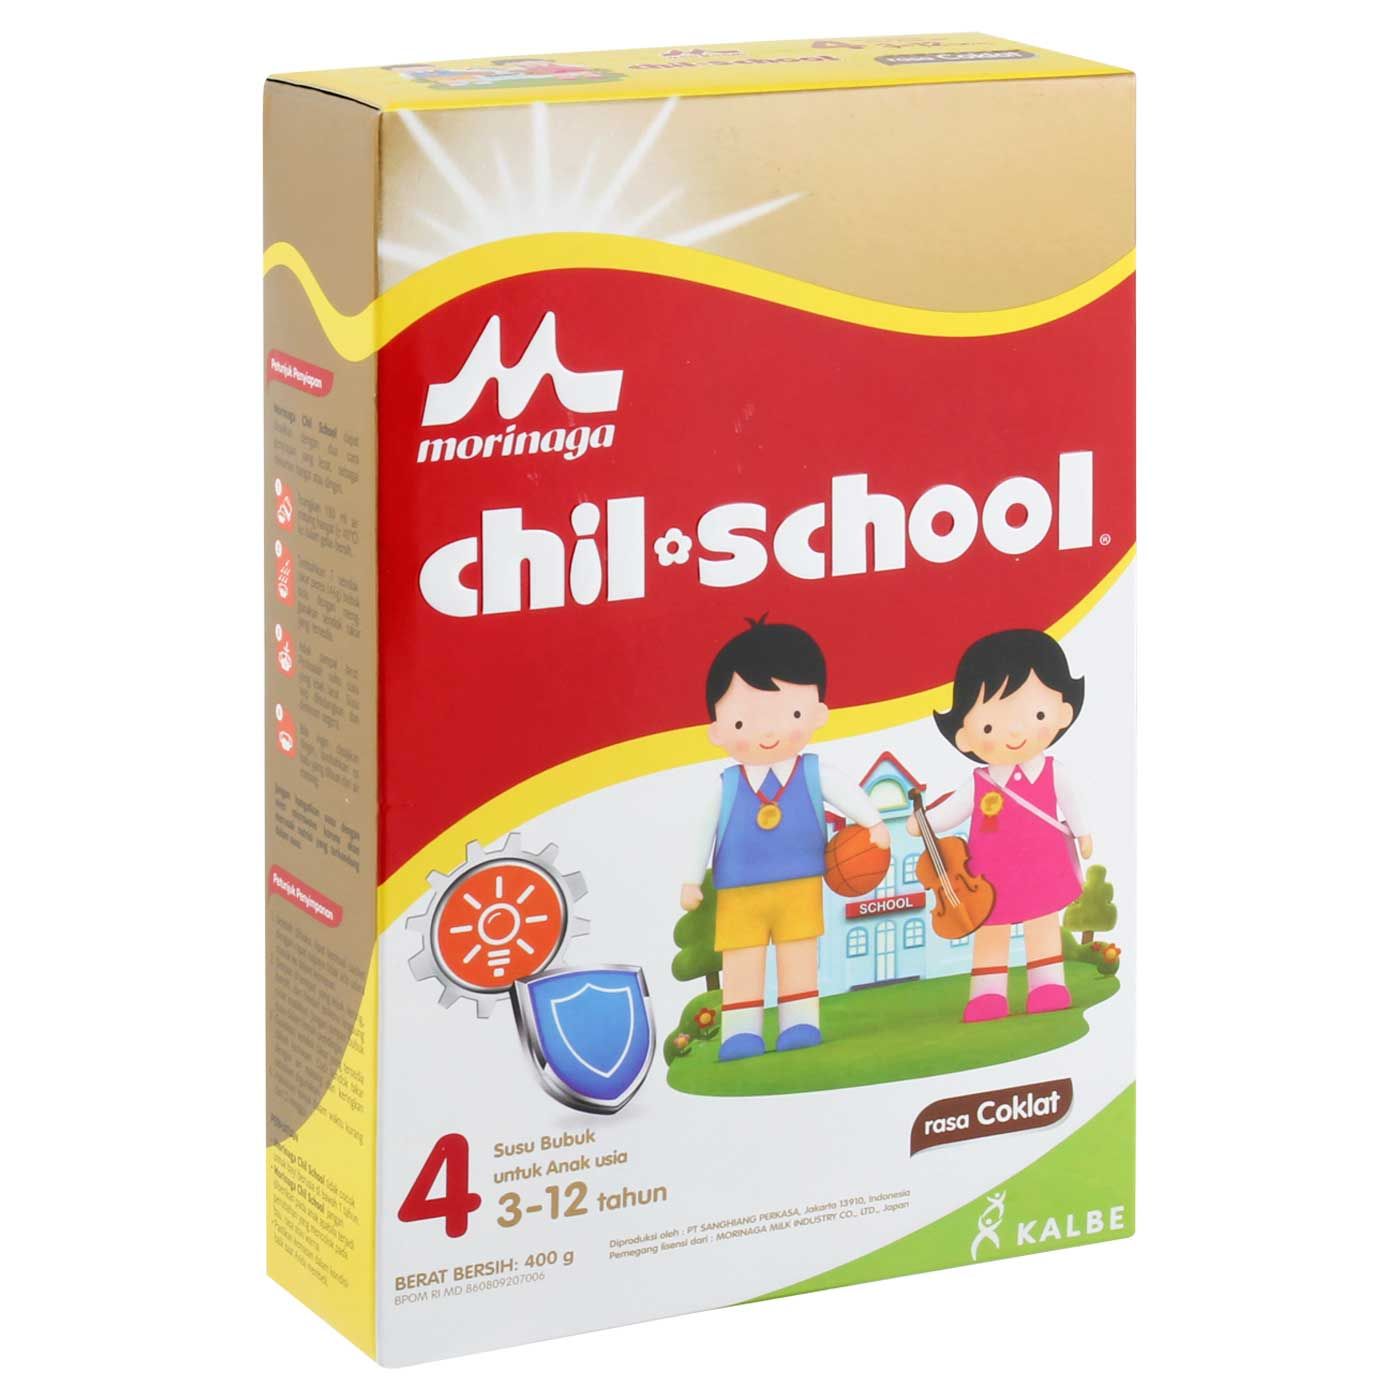 Morinaga Chil School Coklat 400gr Box - 2